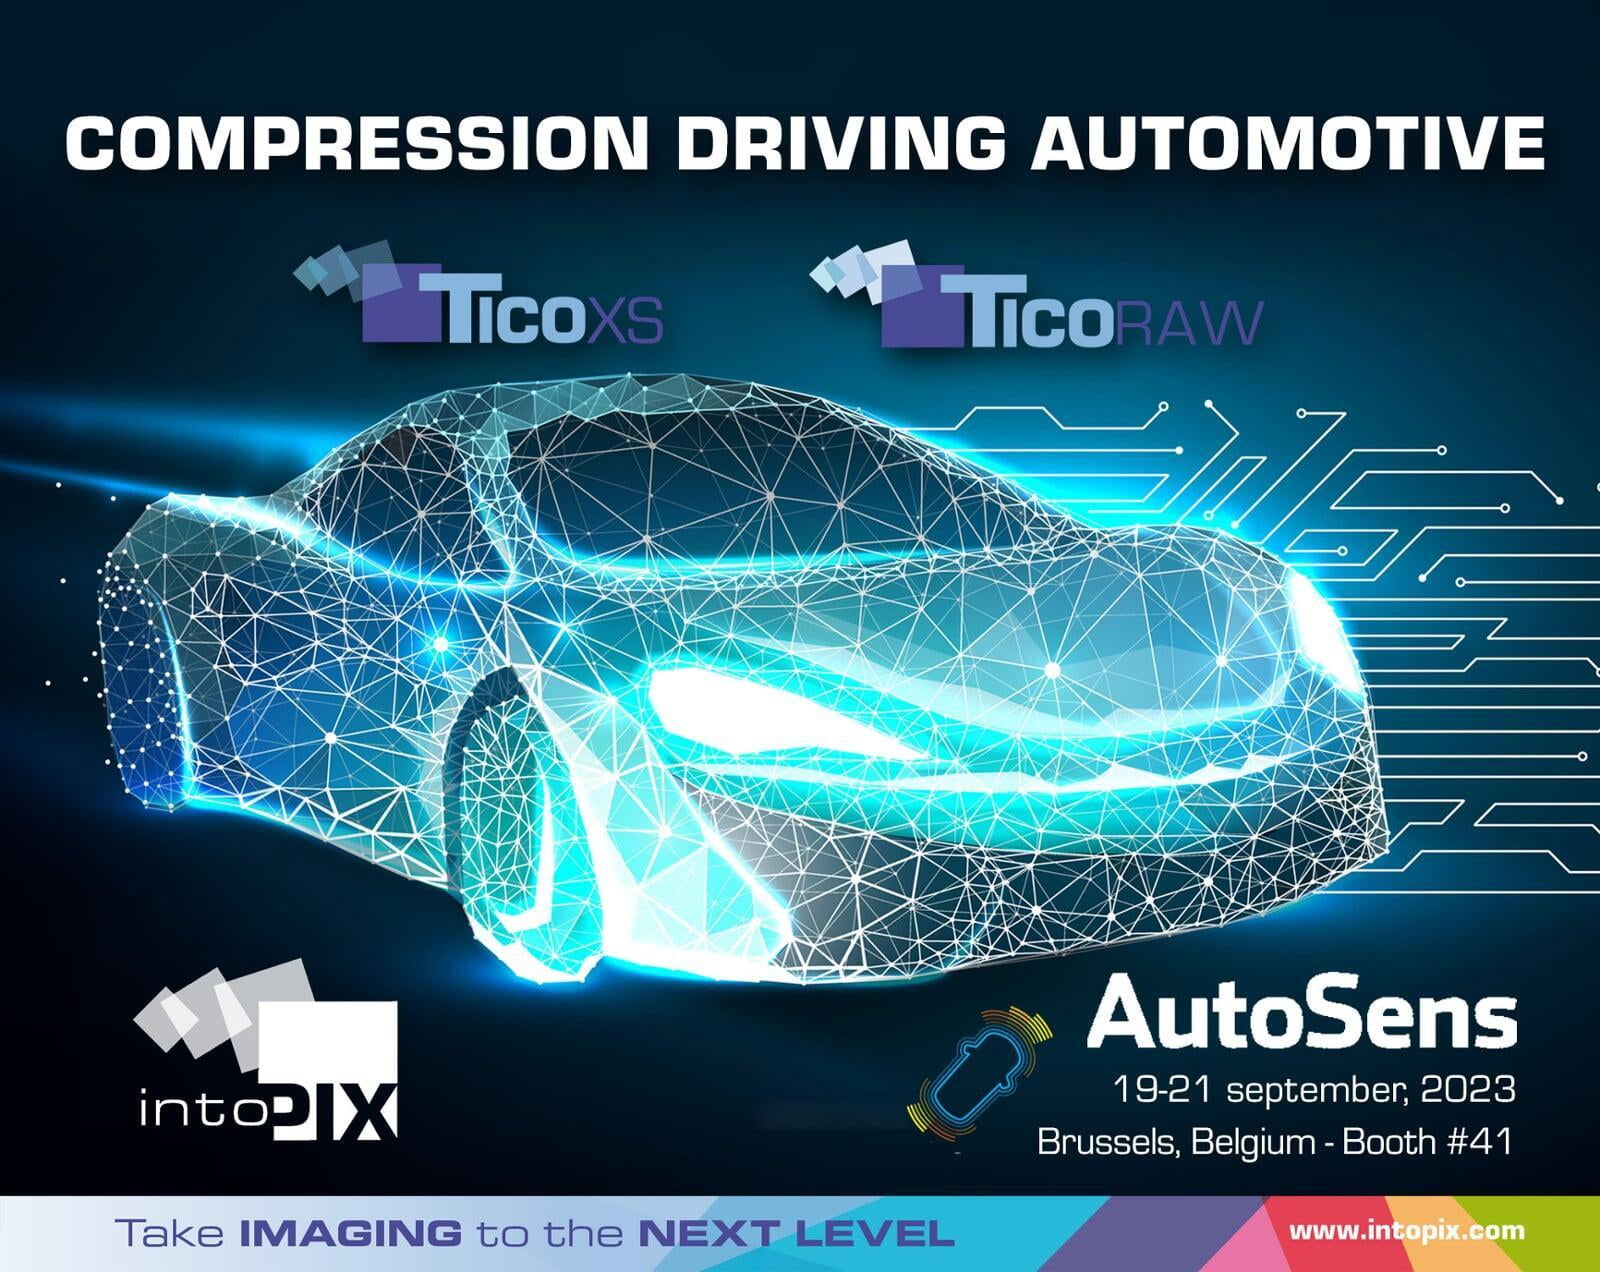 intoPIXは、AutoSens 2023で、自動車の技術革新を推進する新しい軽量ビデオ圧縮規格と技術を紹介します。